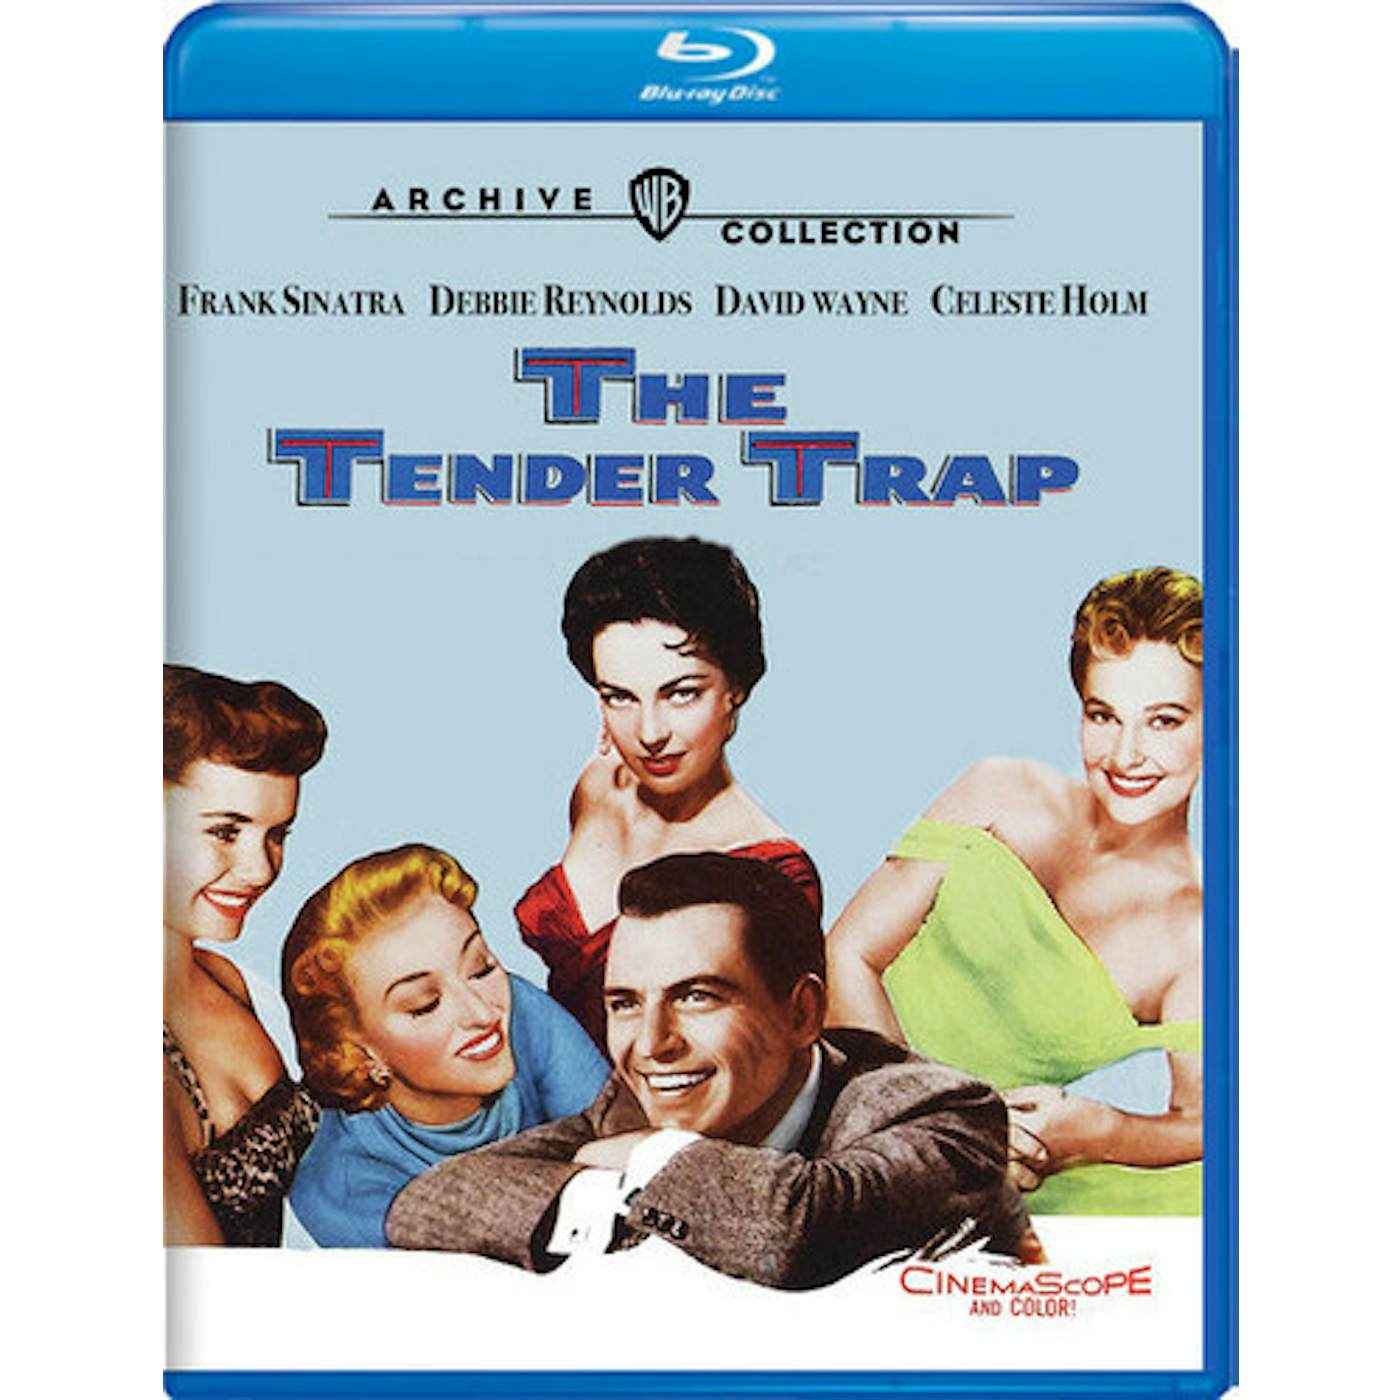 TENDER TRAP (1955) Blu-ray